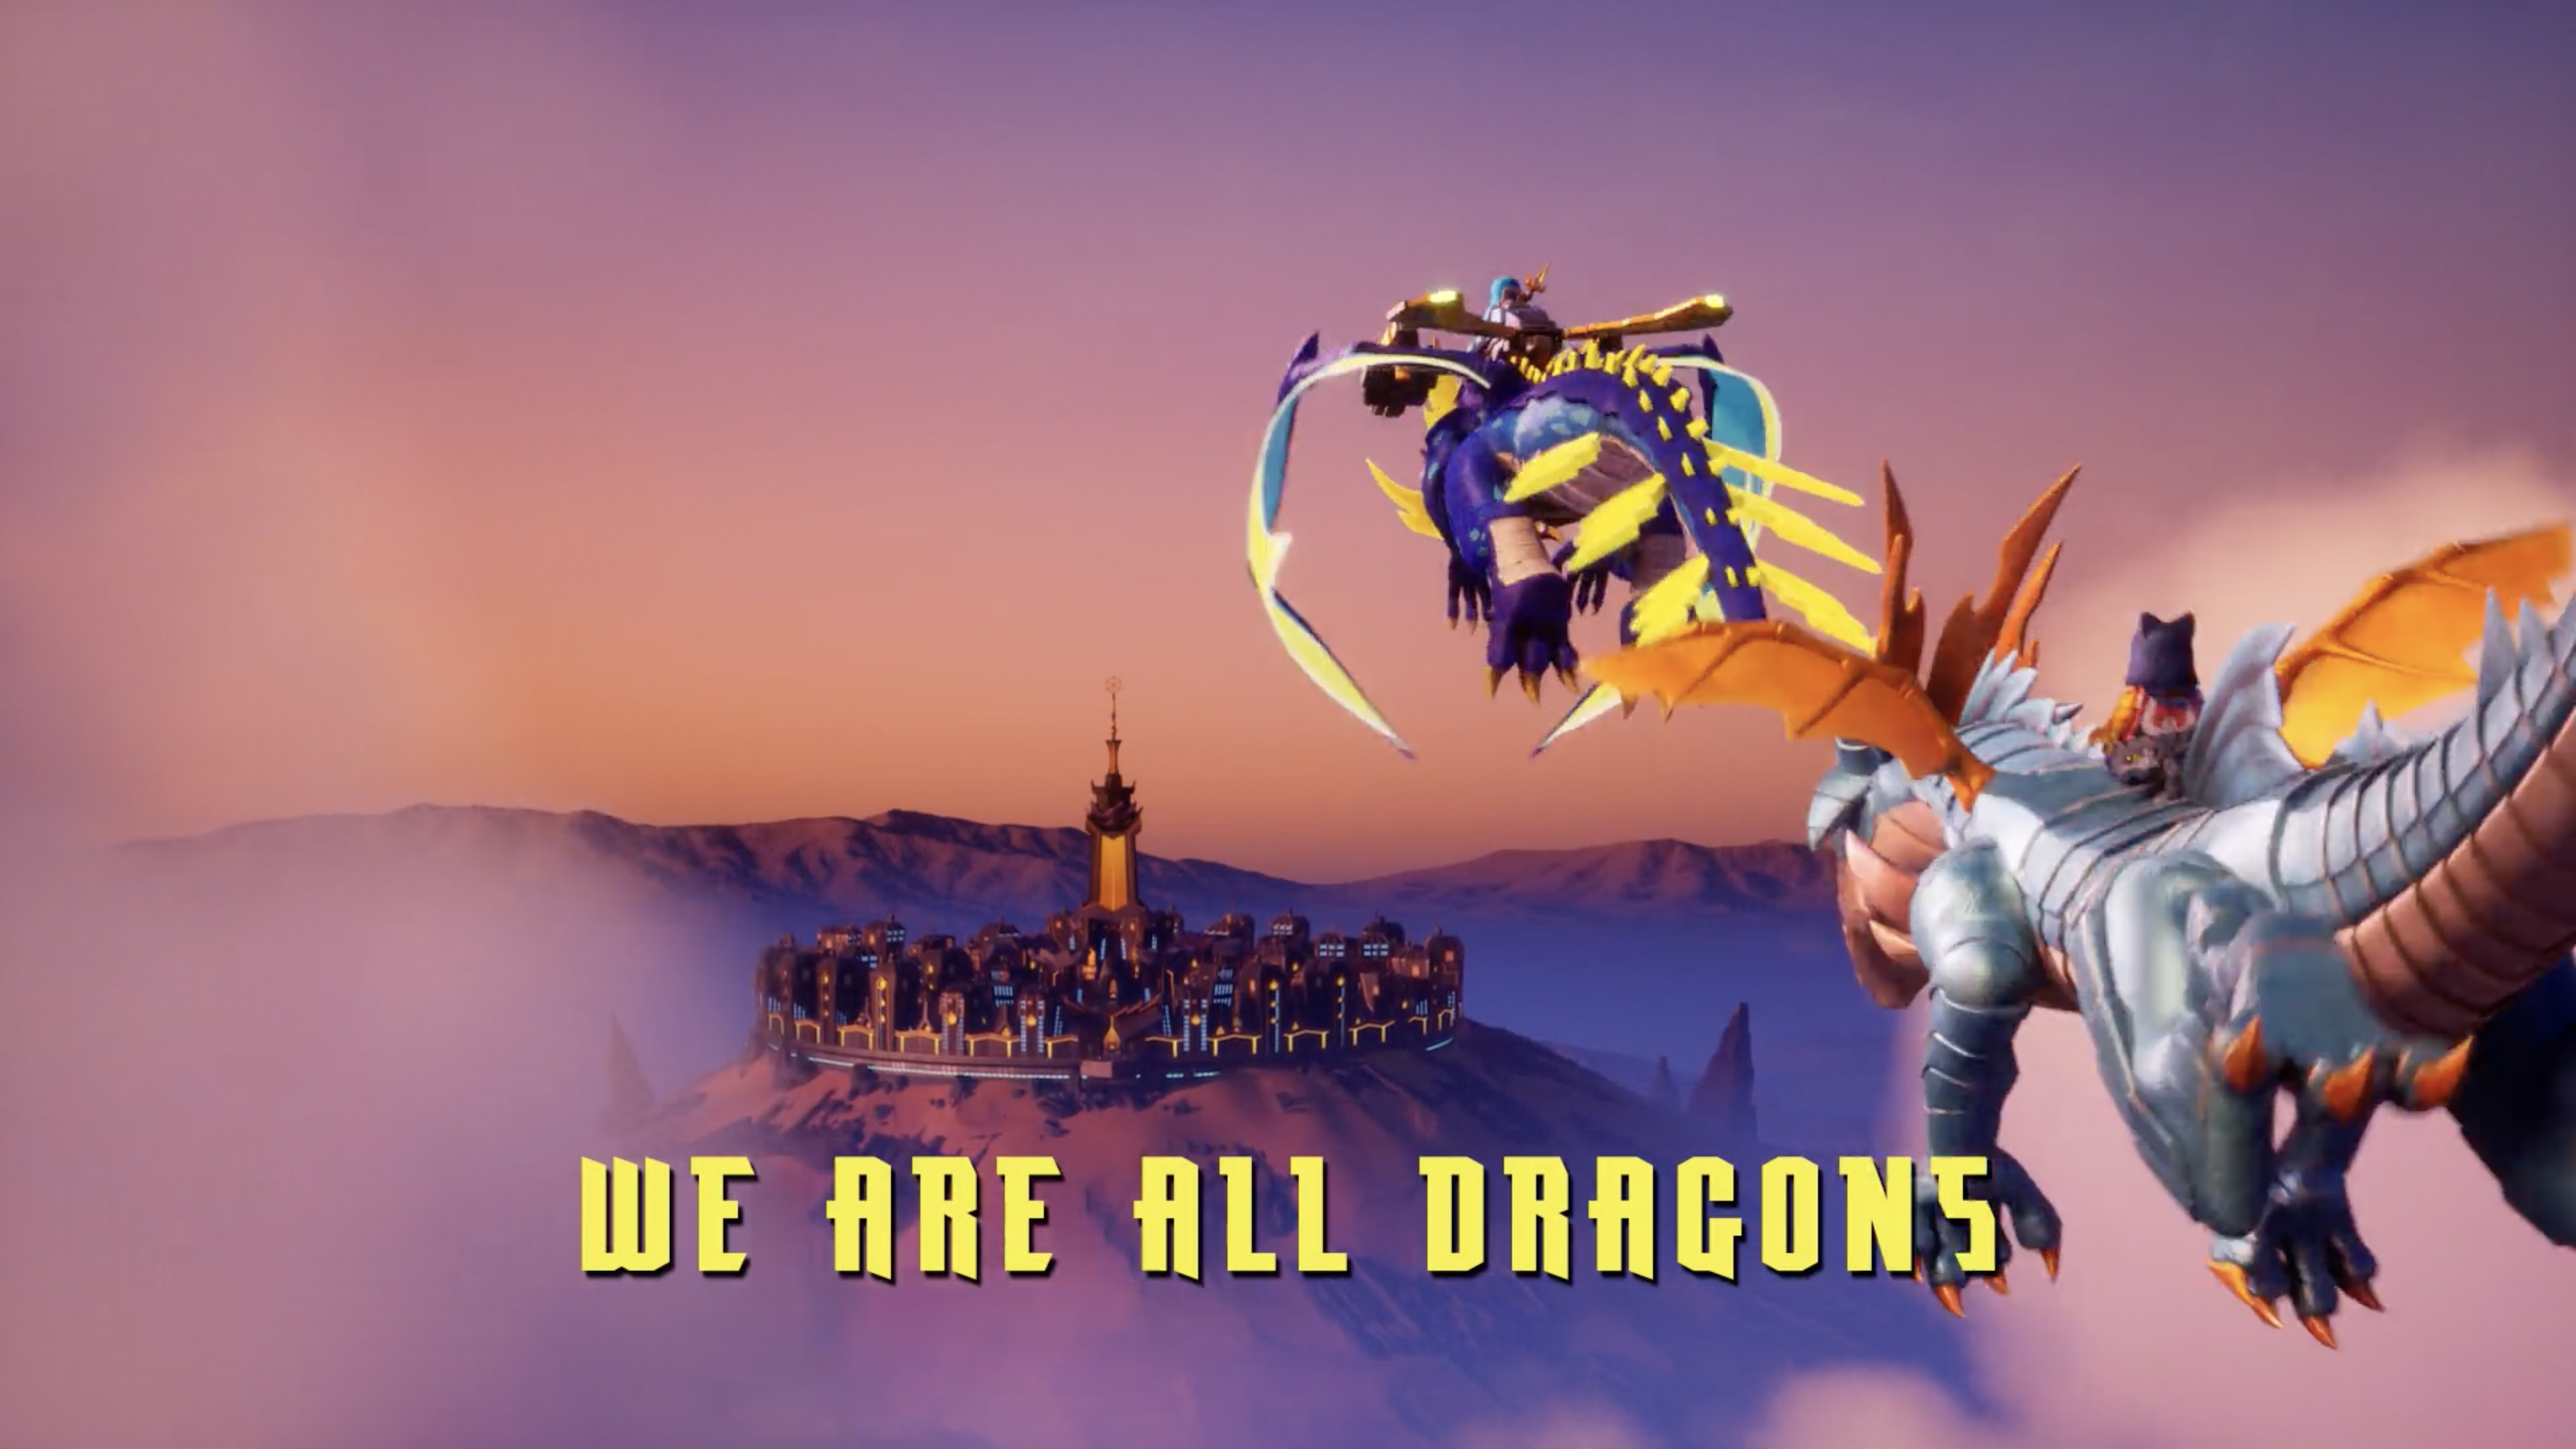 Ninjago: Dragons Rising, Ninjago Wiki